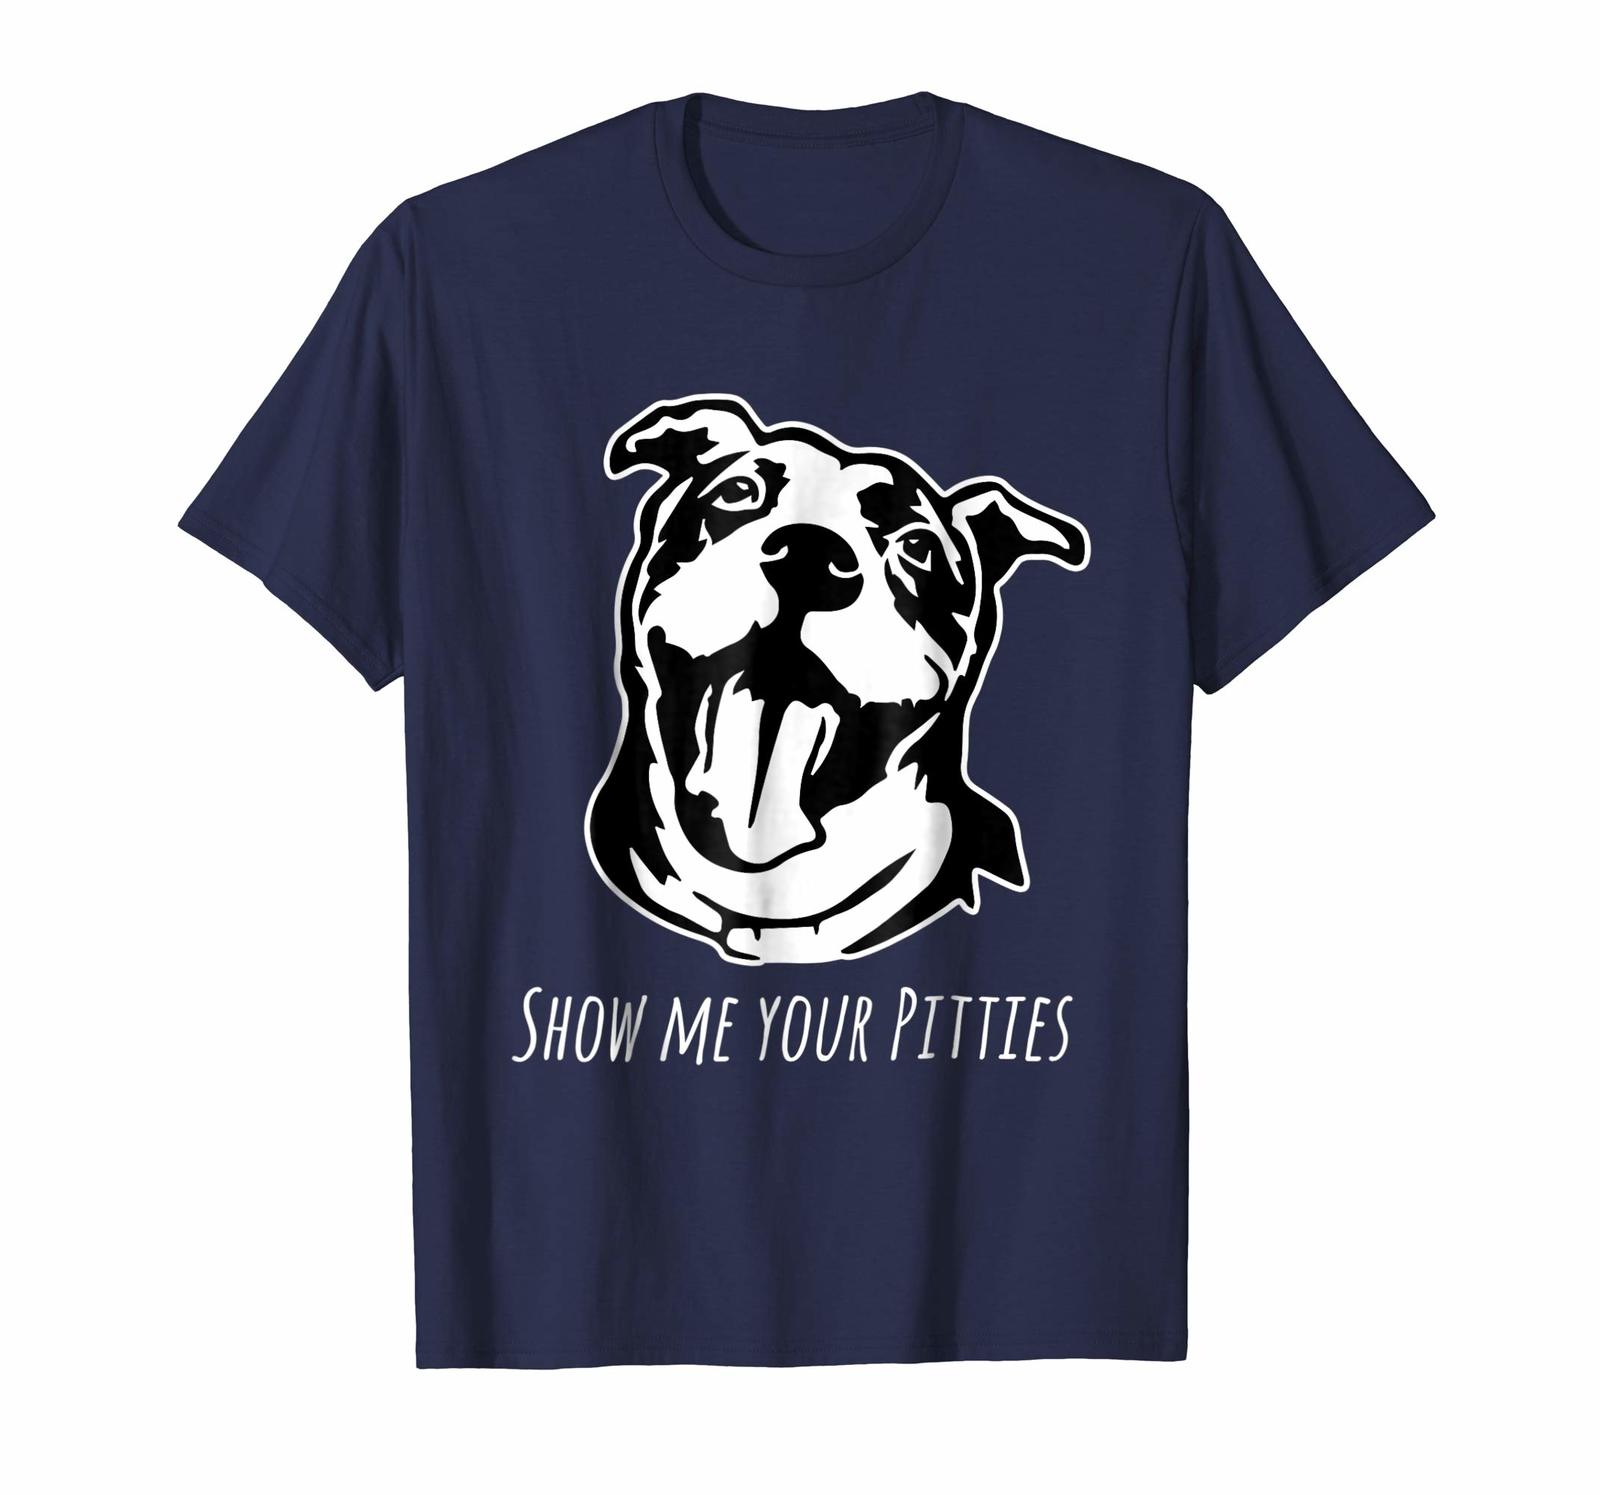 Dog Fashion - Show me your Pitties Funny Pitbull Dog Bully Breed Tee Shirt Men